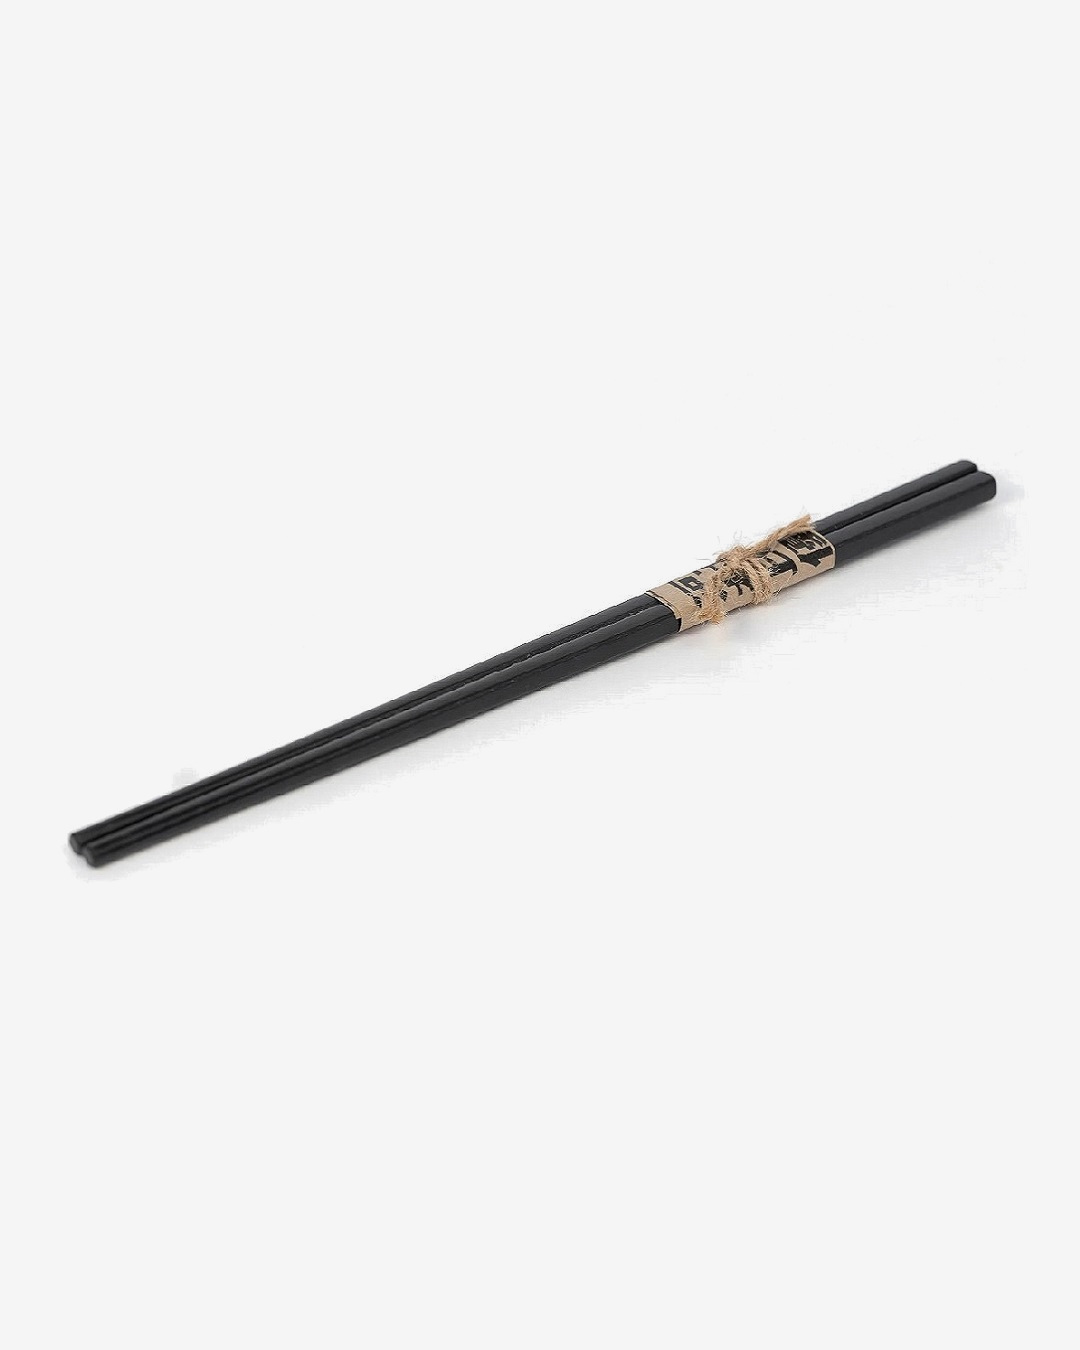 Black chopstick set